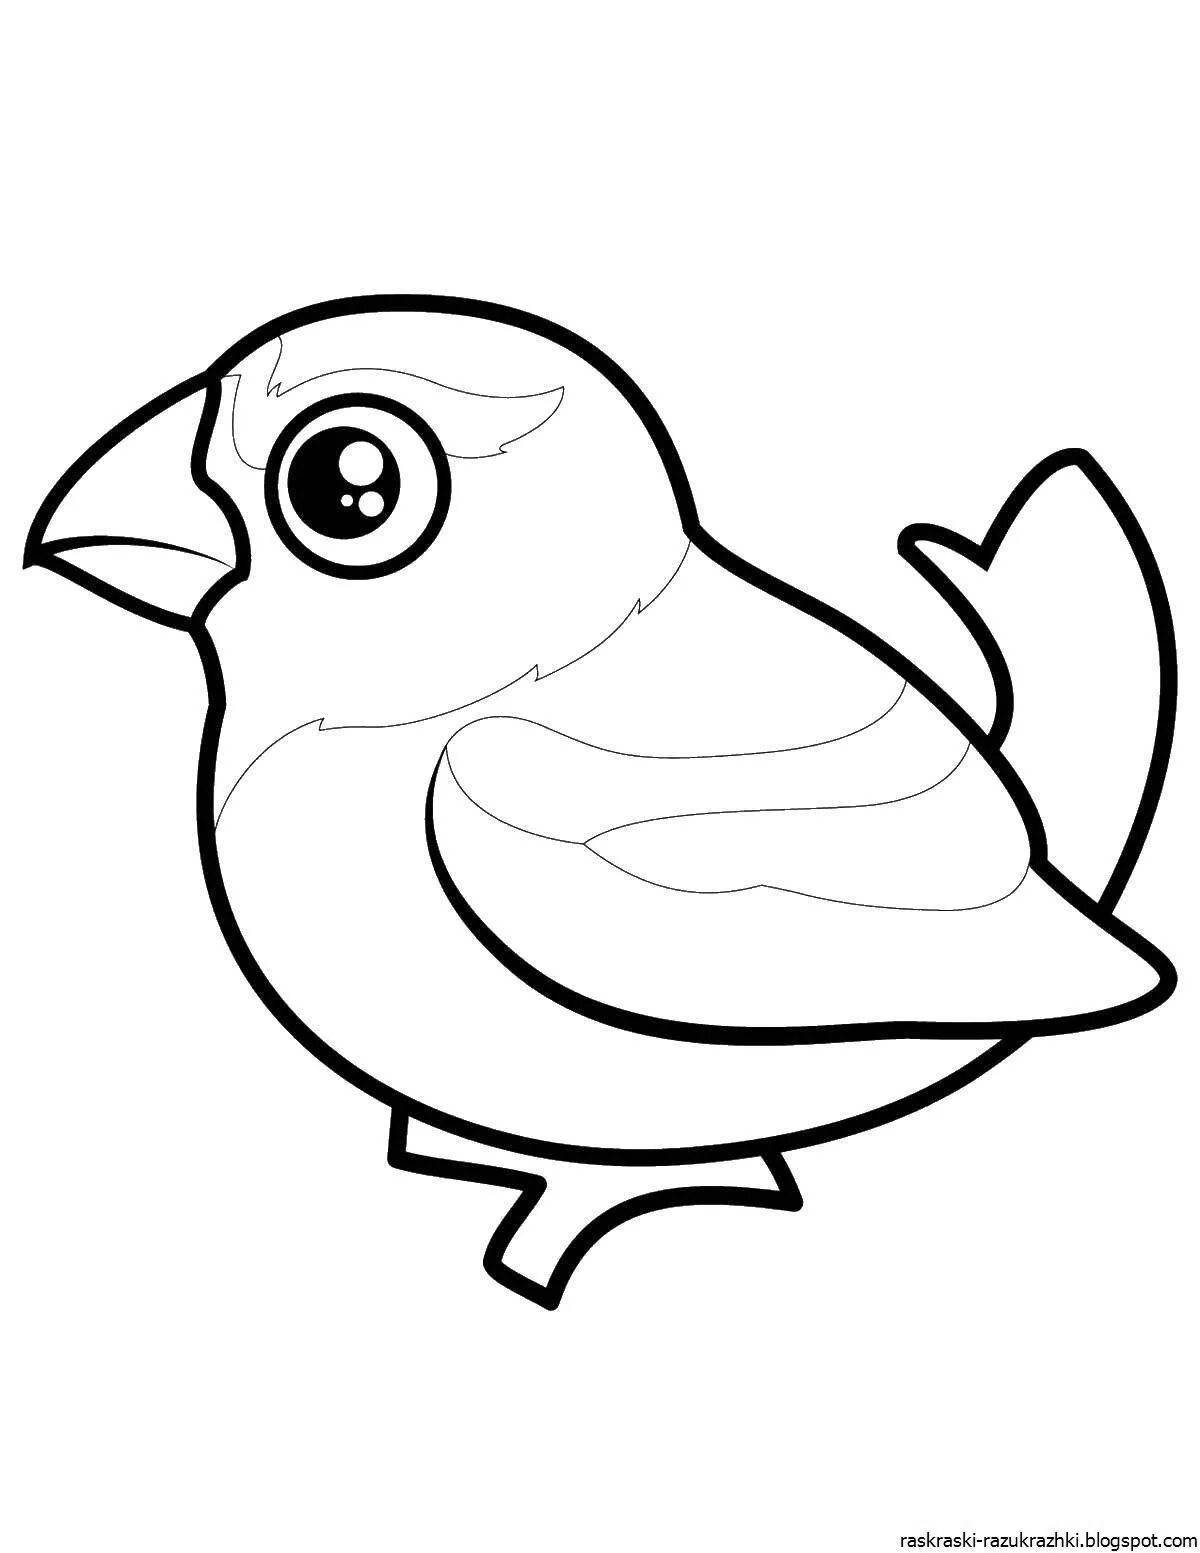 Lovely bird drawing for kids